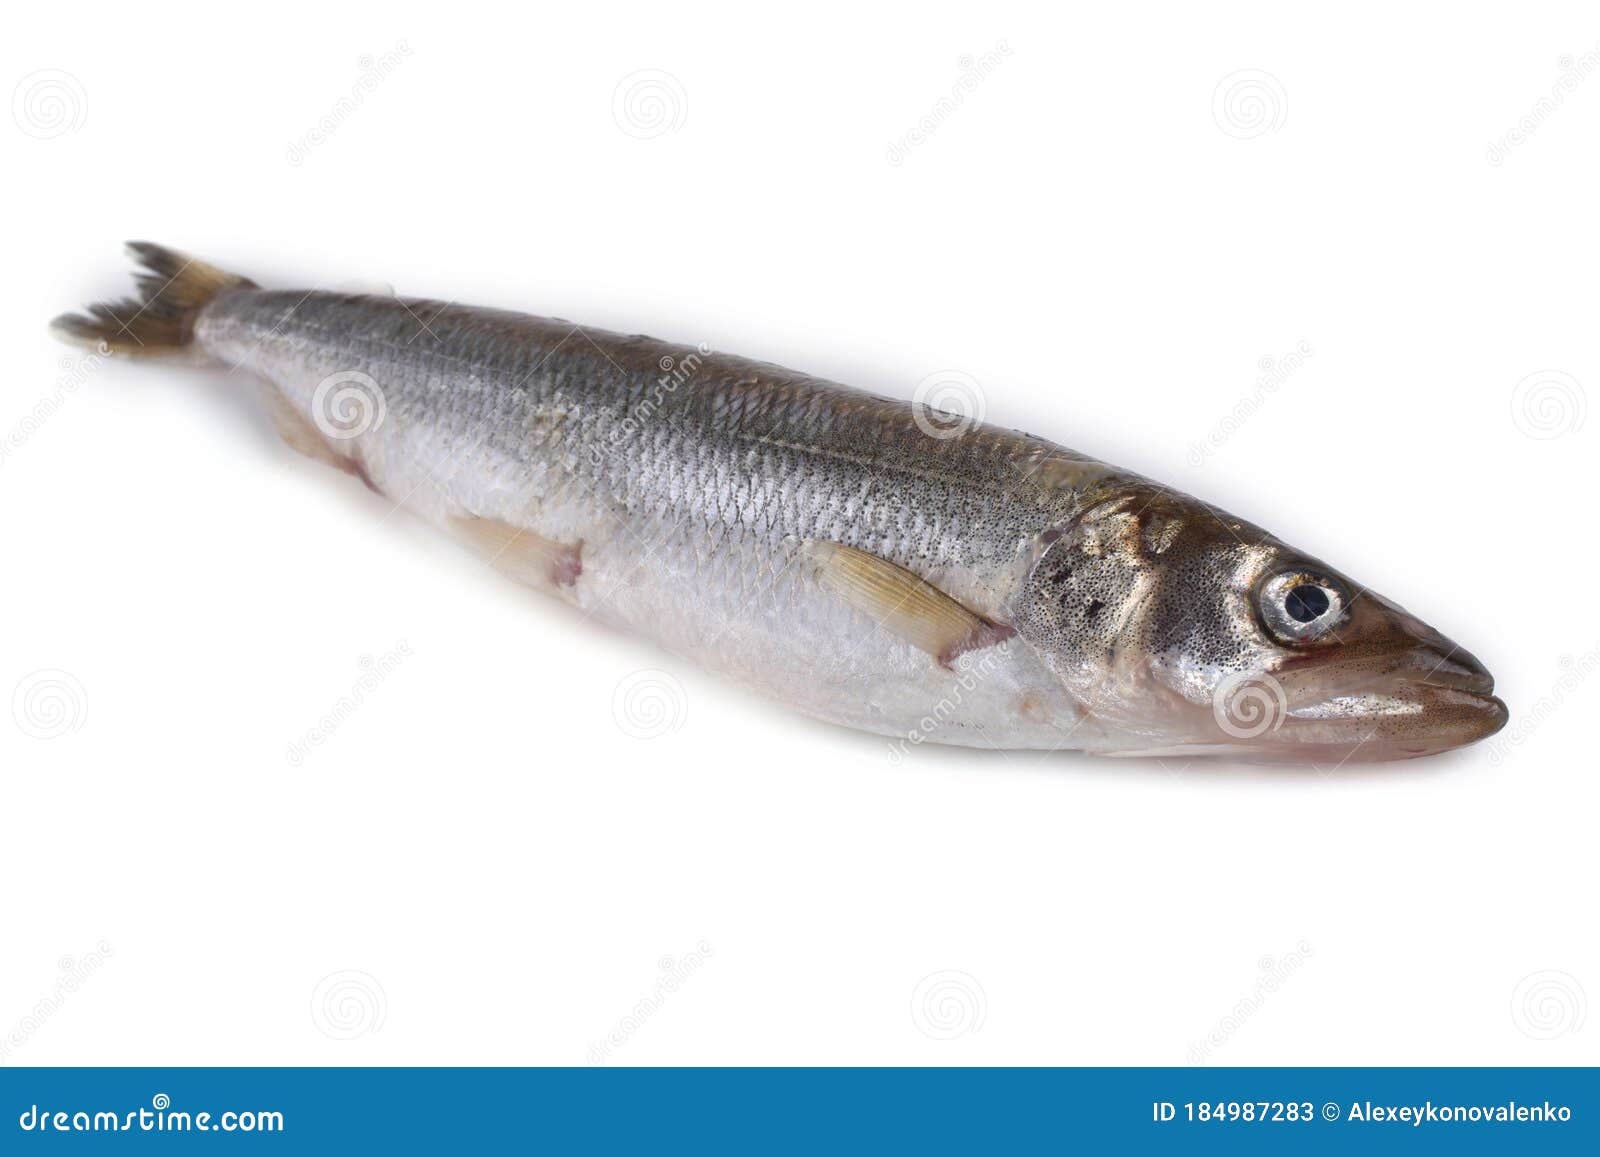 Smelt Fish Isolated on White. Big Pacific Smelt - Osmerus Mordax